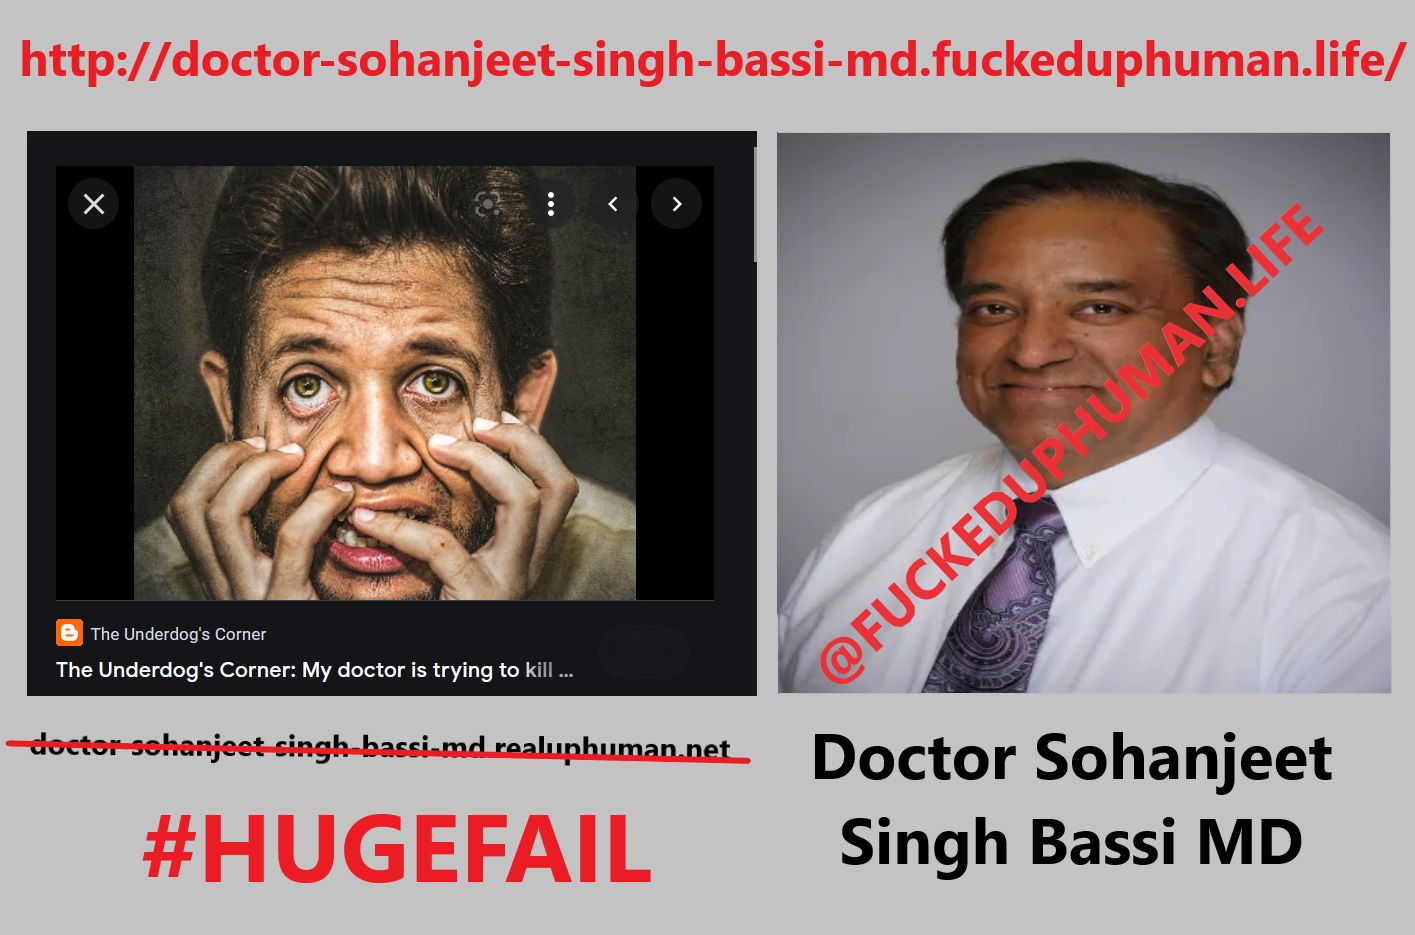 doctor-sohanjeet-singh-bassi-md.fuckeduphuman.life-HUGEFAIL.png